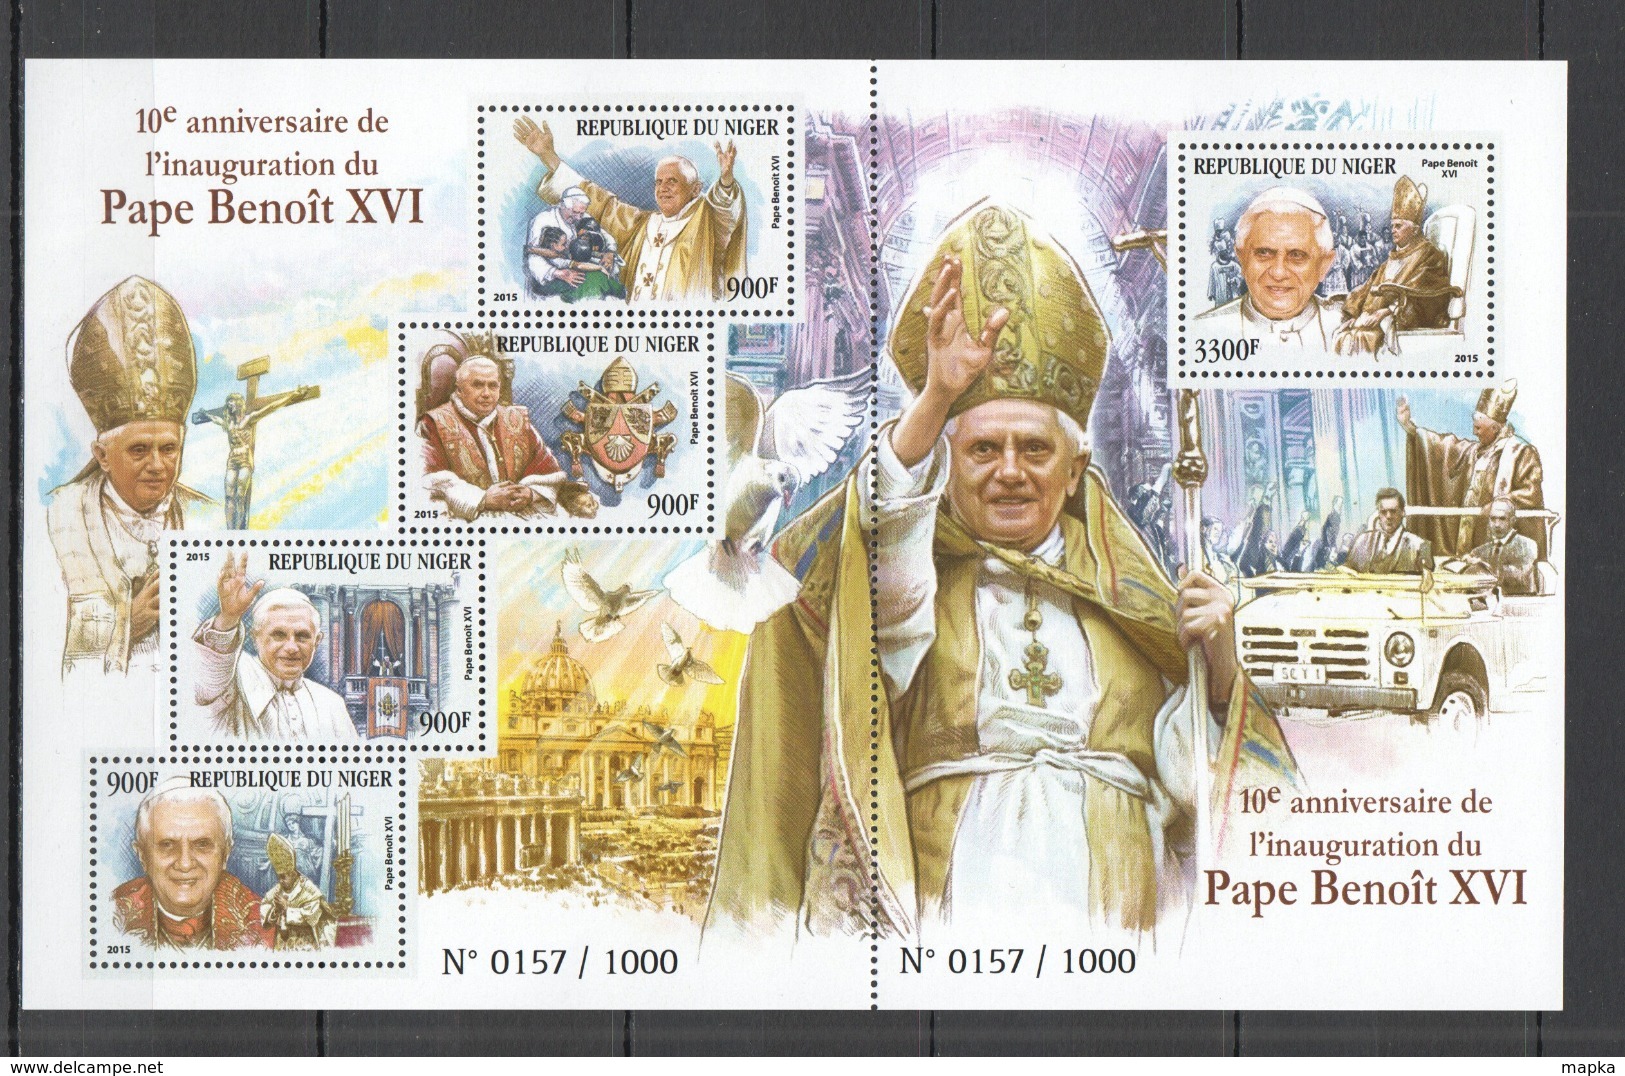 QQ046 2015 NIGER 10TH ANNIVERSARY INAGURATION POPE BENOIT XVI 1SH MNH - Papi